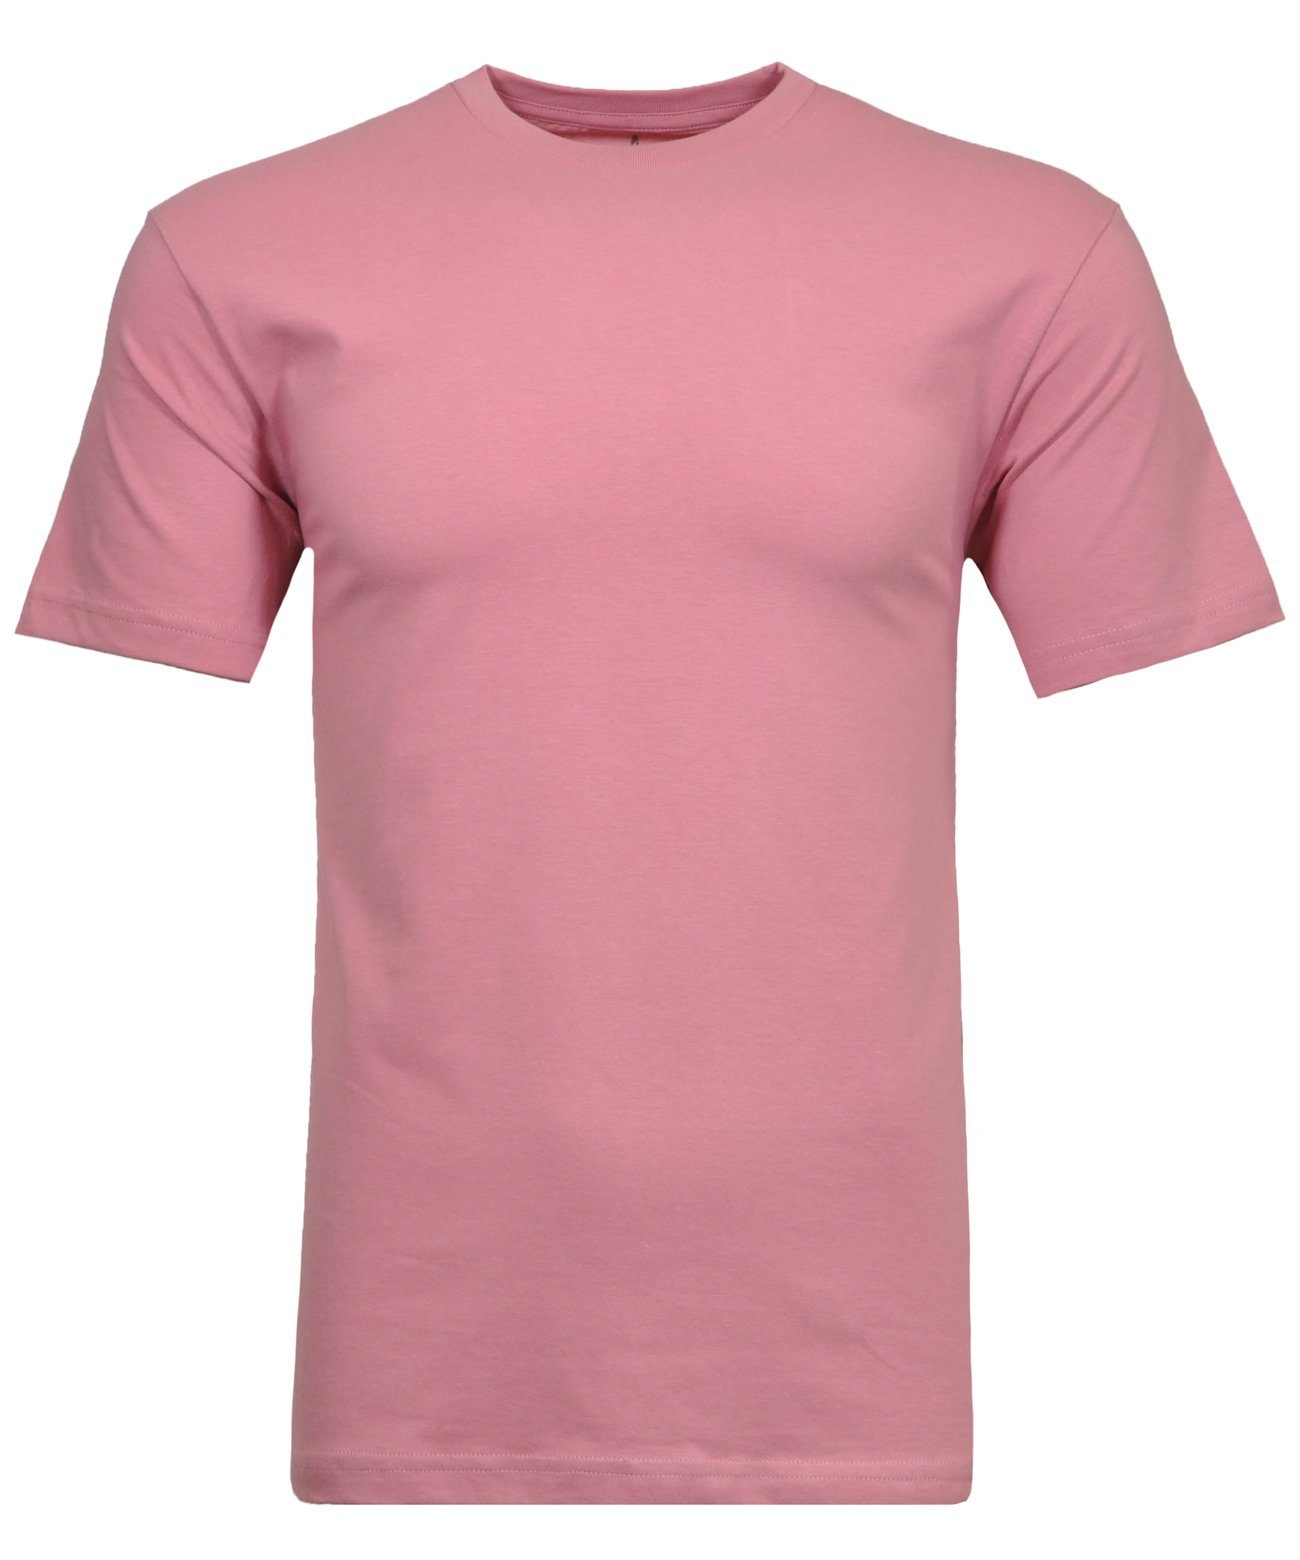 RAGMAN Longshirt Pink-641